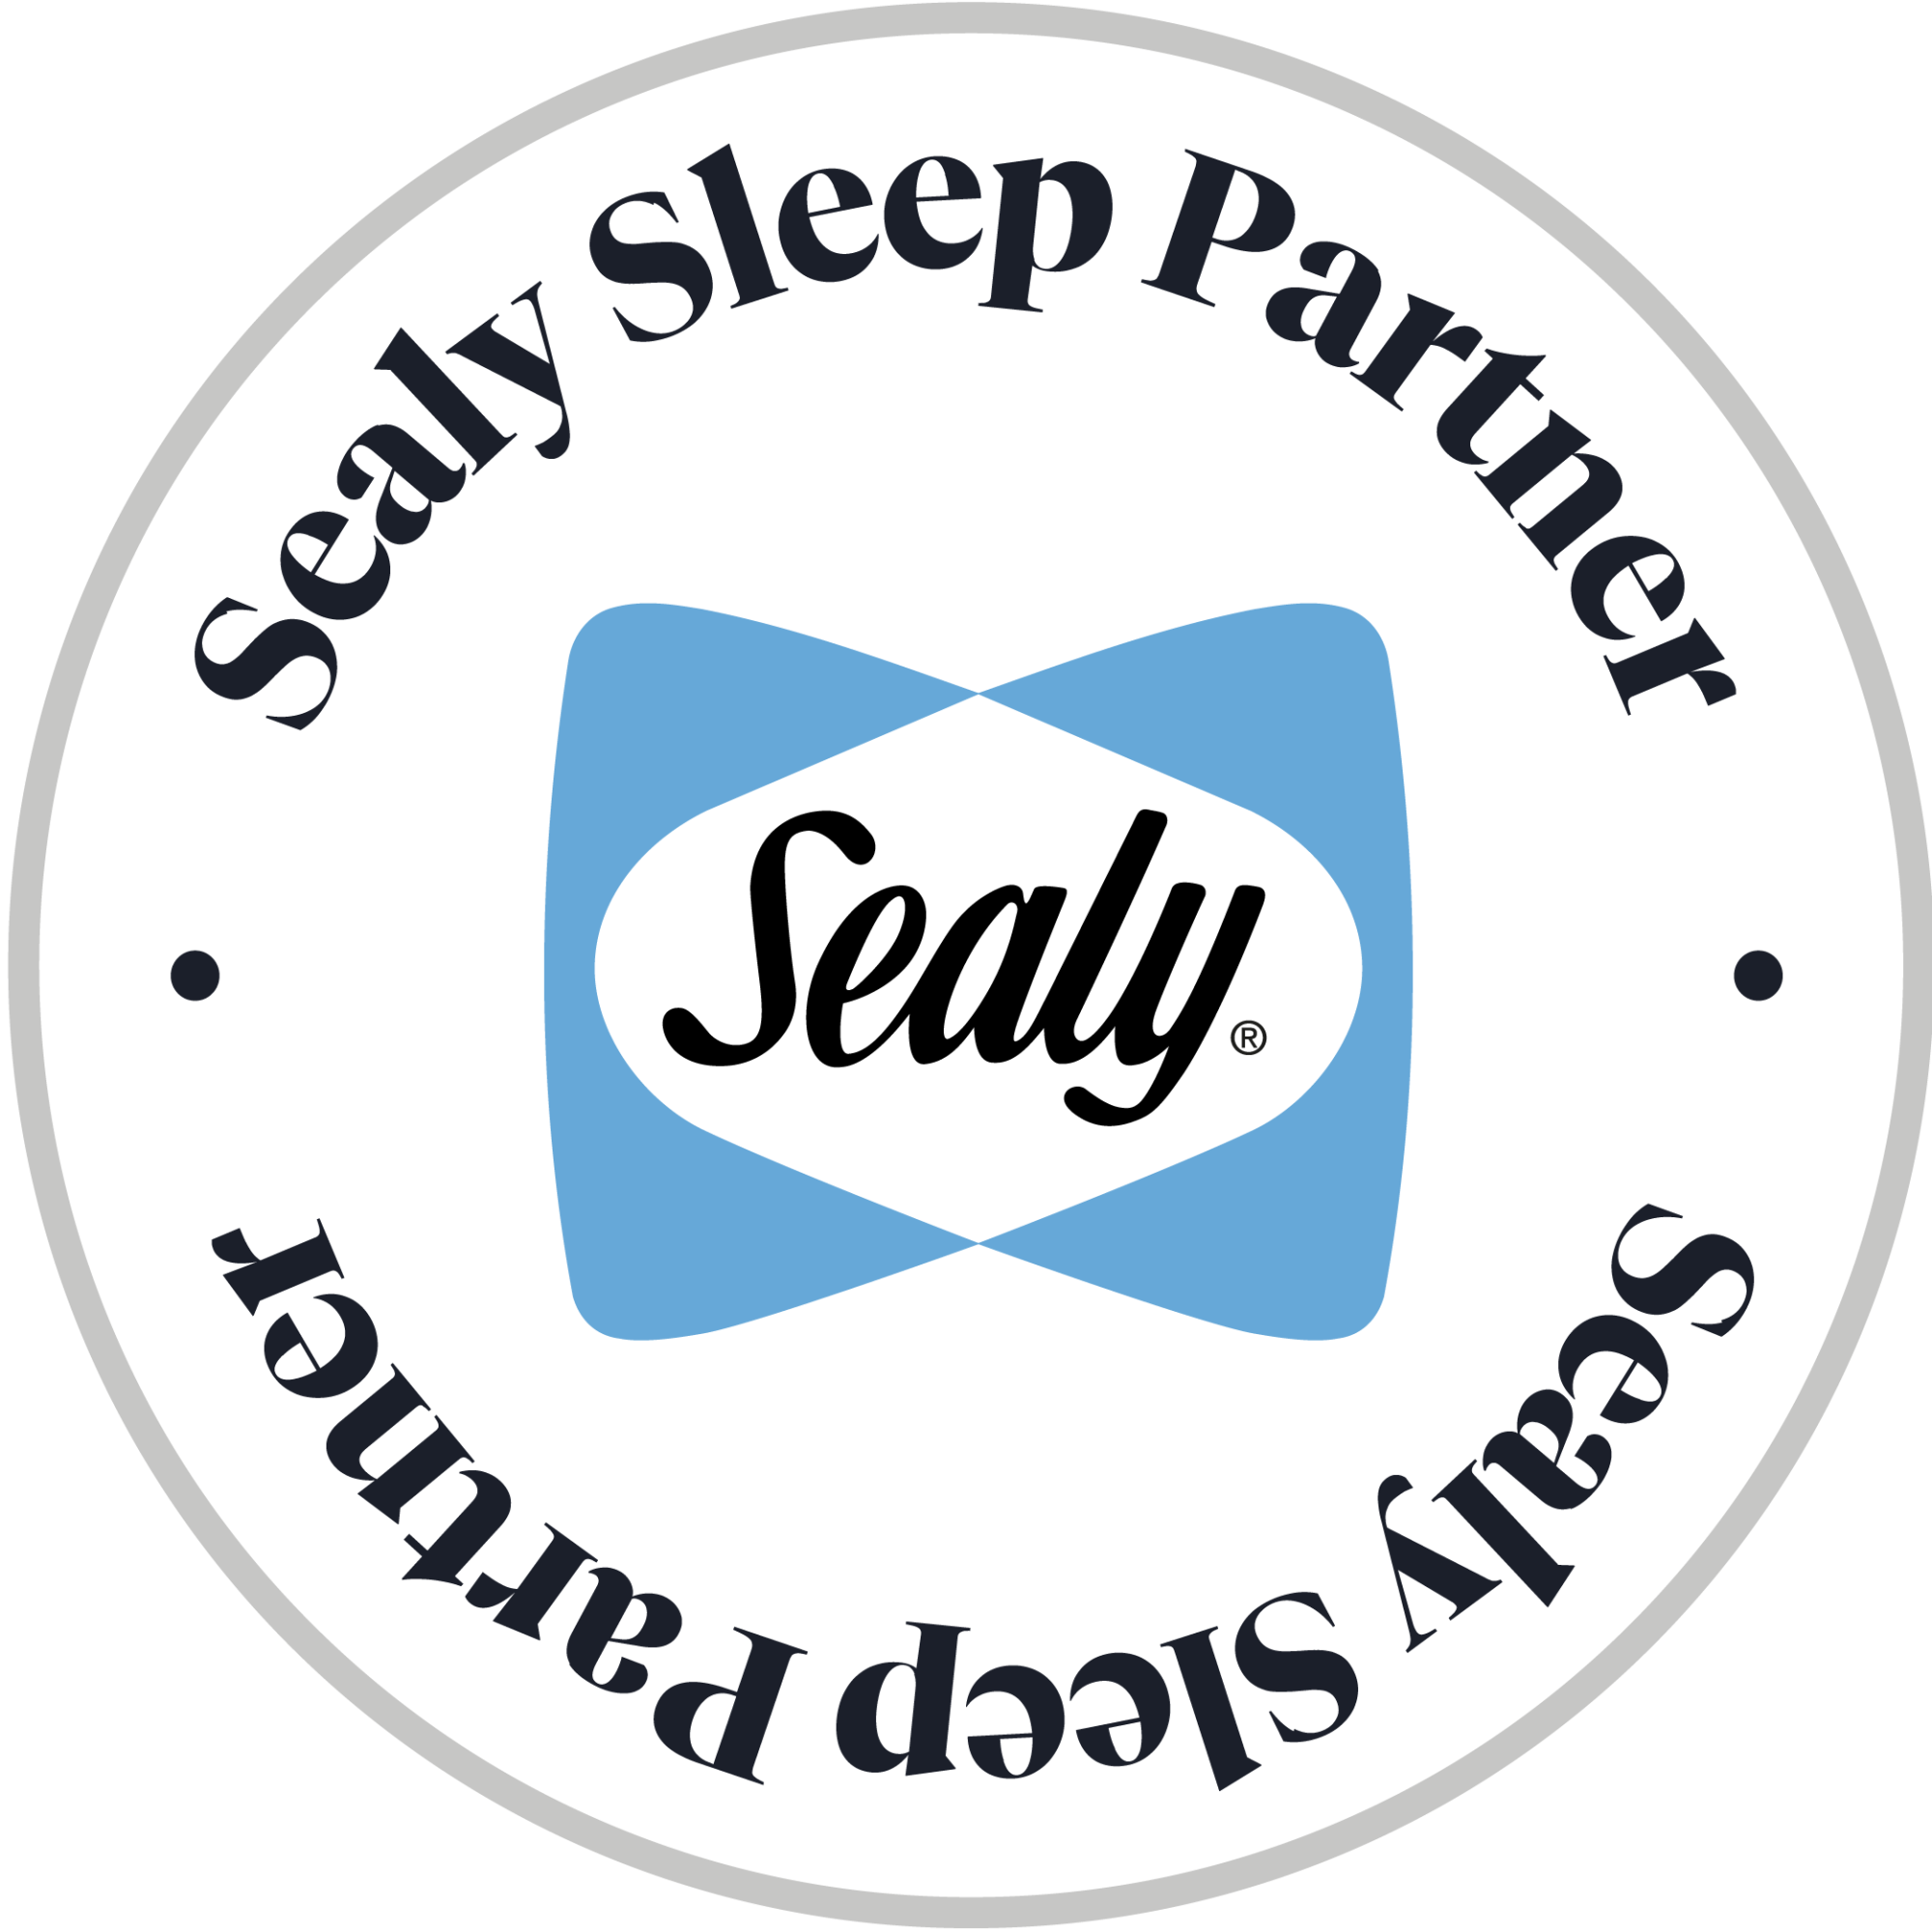 Sealy sleep partner